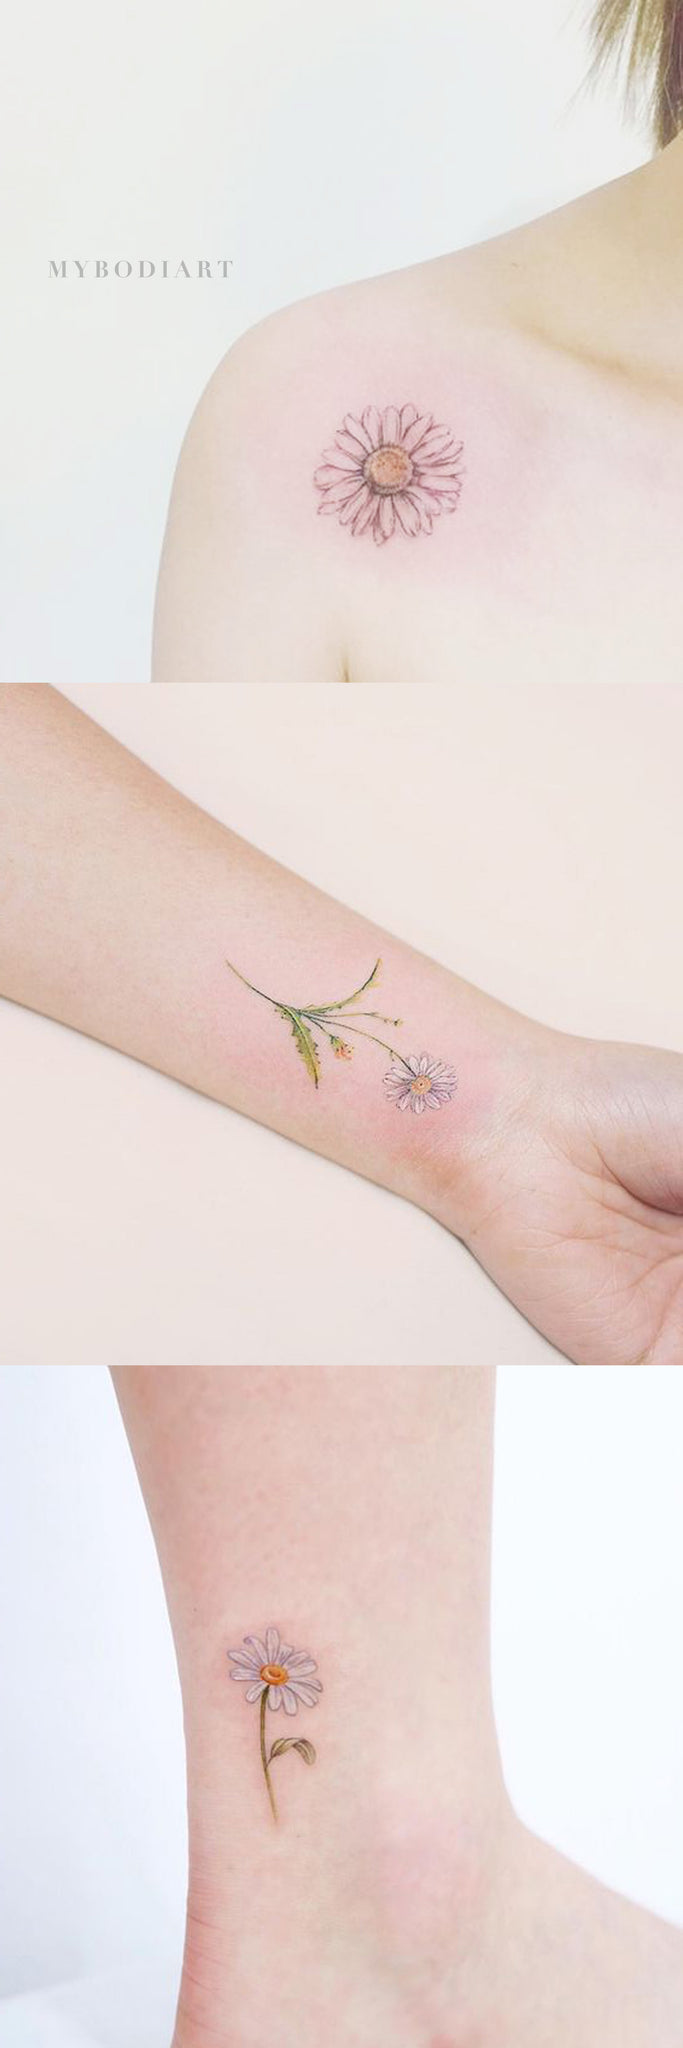 Small Cute Delicate Daisy Shoulder Wrist Ankle Tattoo Ideas for Women - Tiny Floral Flower Tattoos -  pequeñas ideas lindas del tatuaje de la margarita para las mujeres - www.MyBodiArt.com